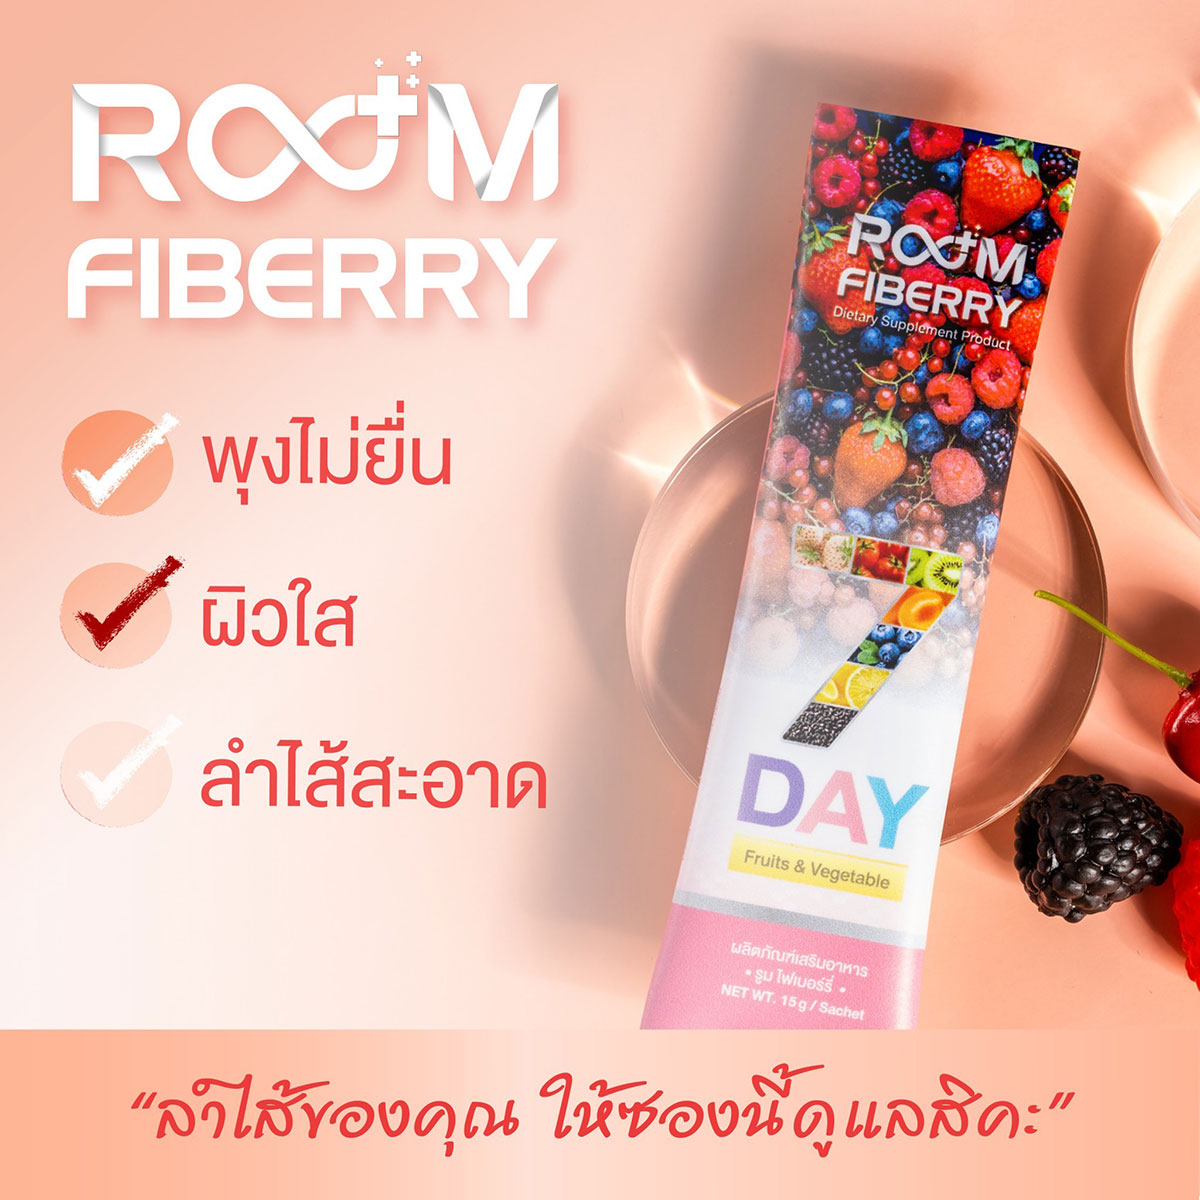 Room Fiberry ตัวช่วยให้ พุงไม่ยื่น ผิวใส ลำไส้สะอาด